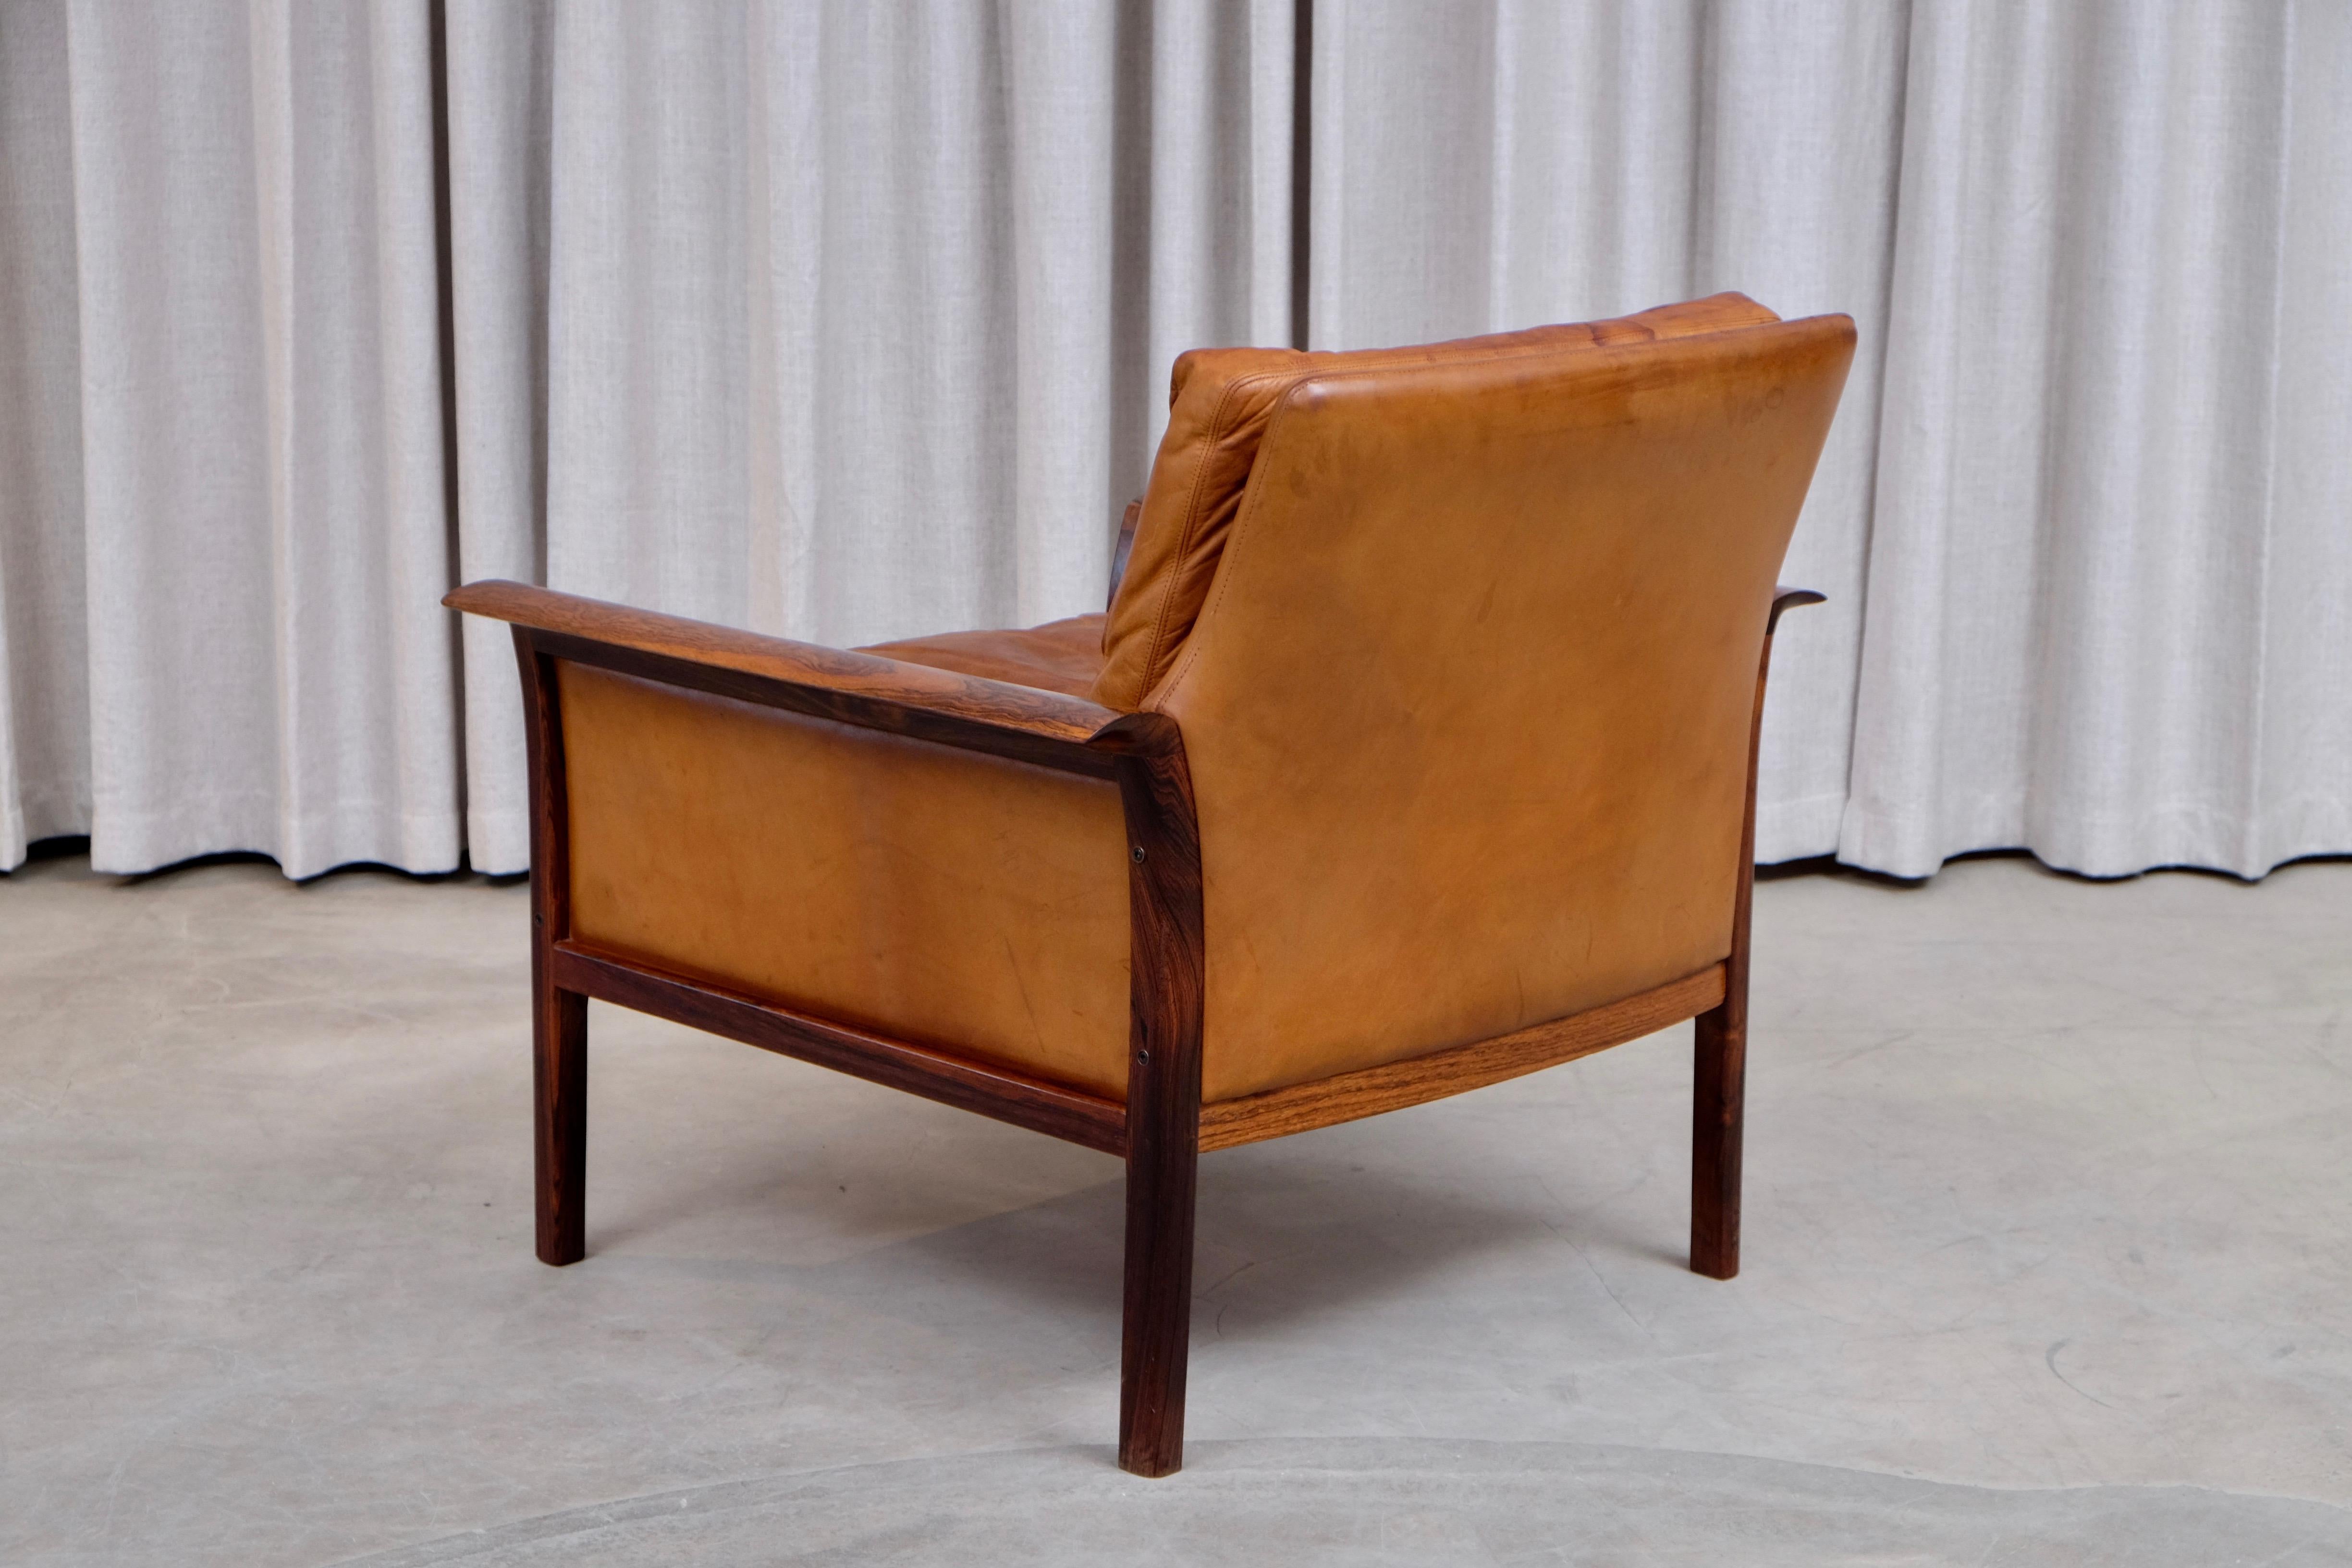 Knut Sæter in collaboration with Fredrik Kayser designed this handsome rosewood lounge chair for Norwegian manufacturer Vatne Møbler. Original cognac brown leather, lovely color.
 